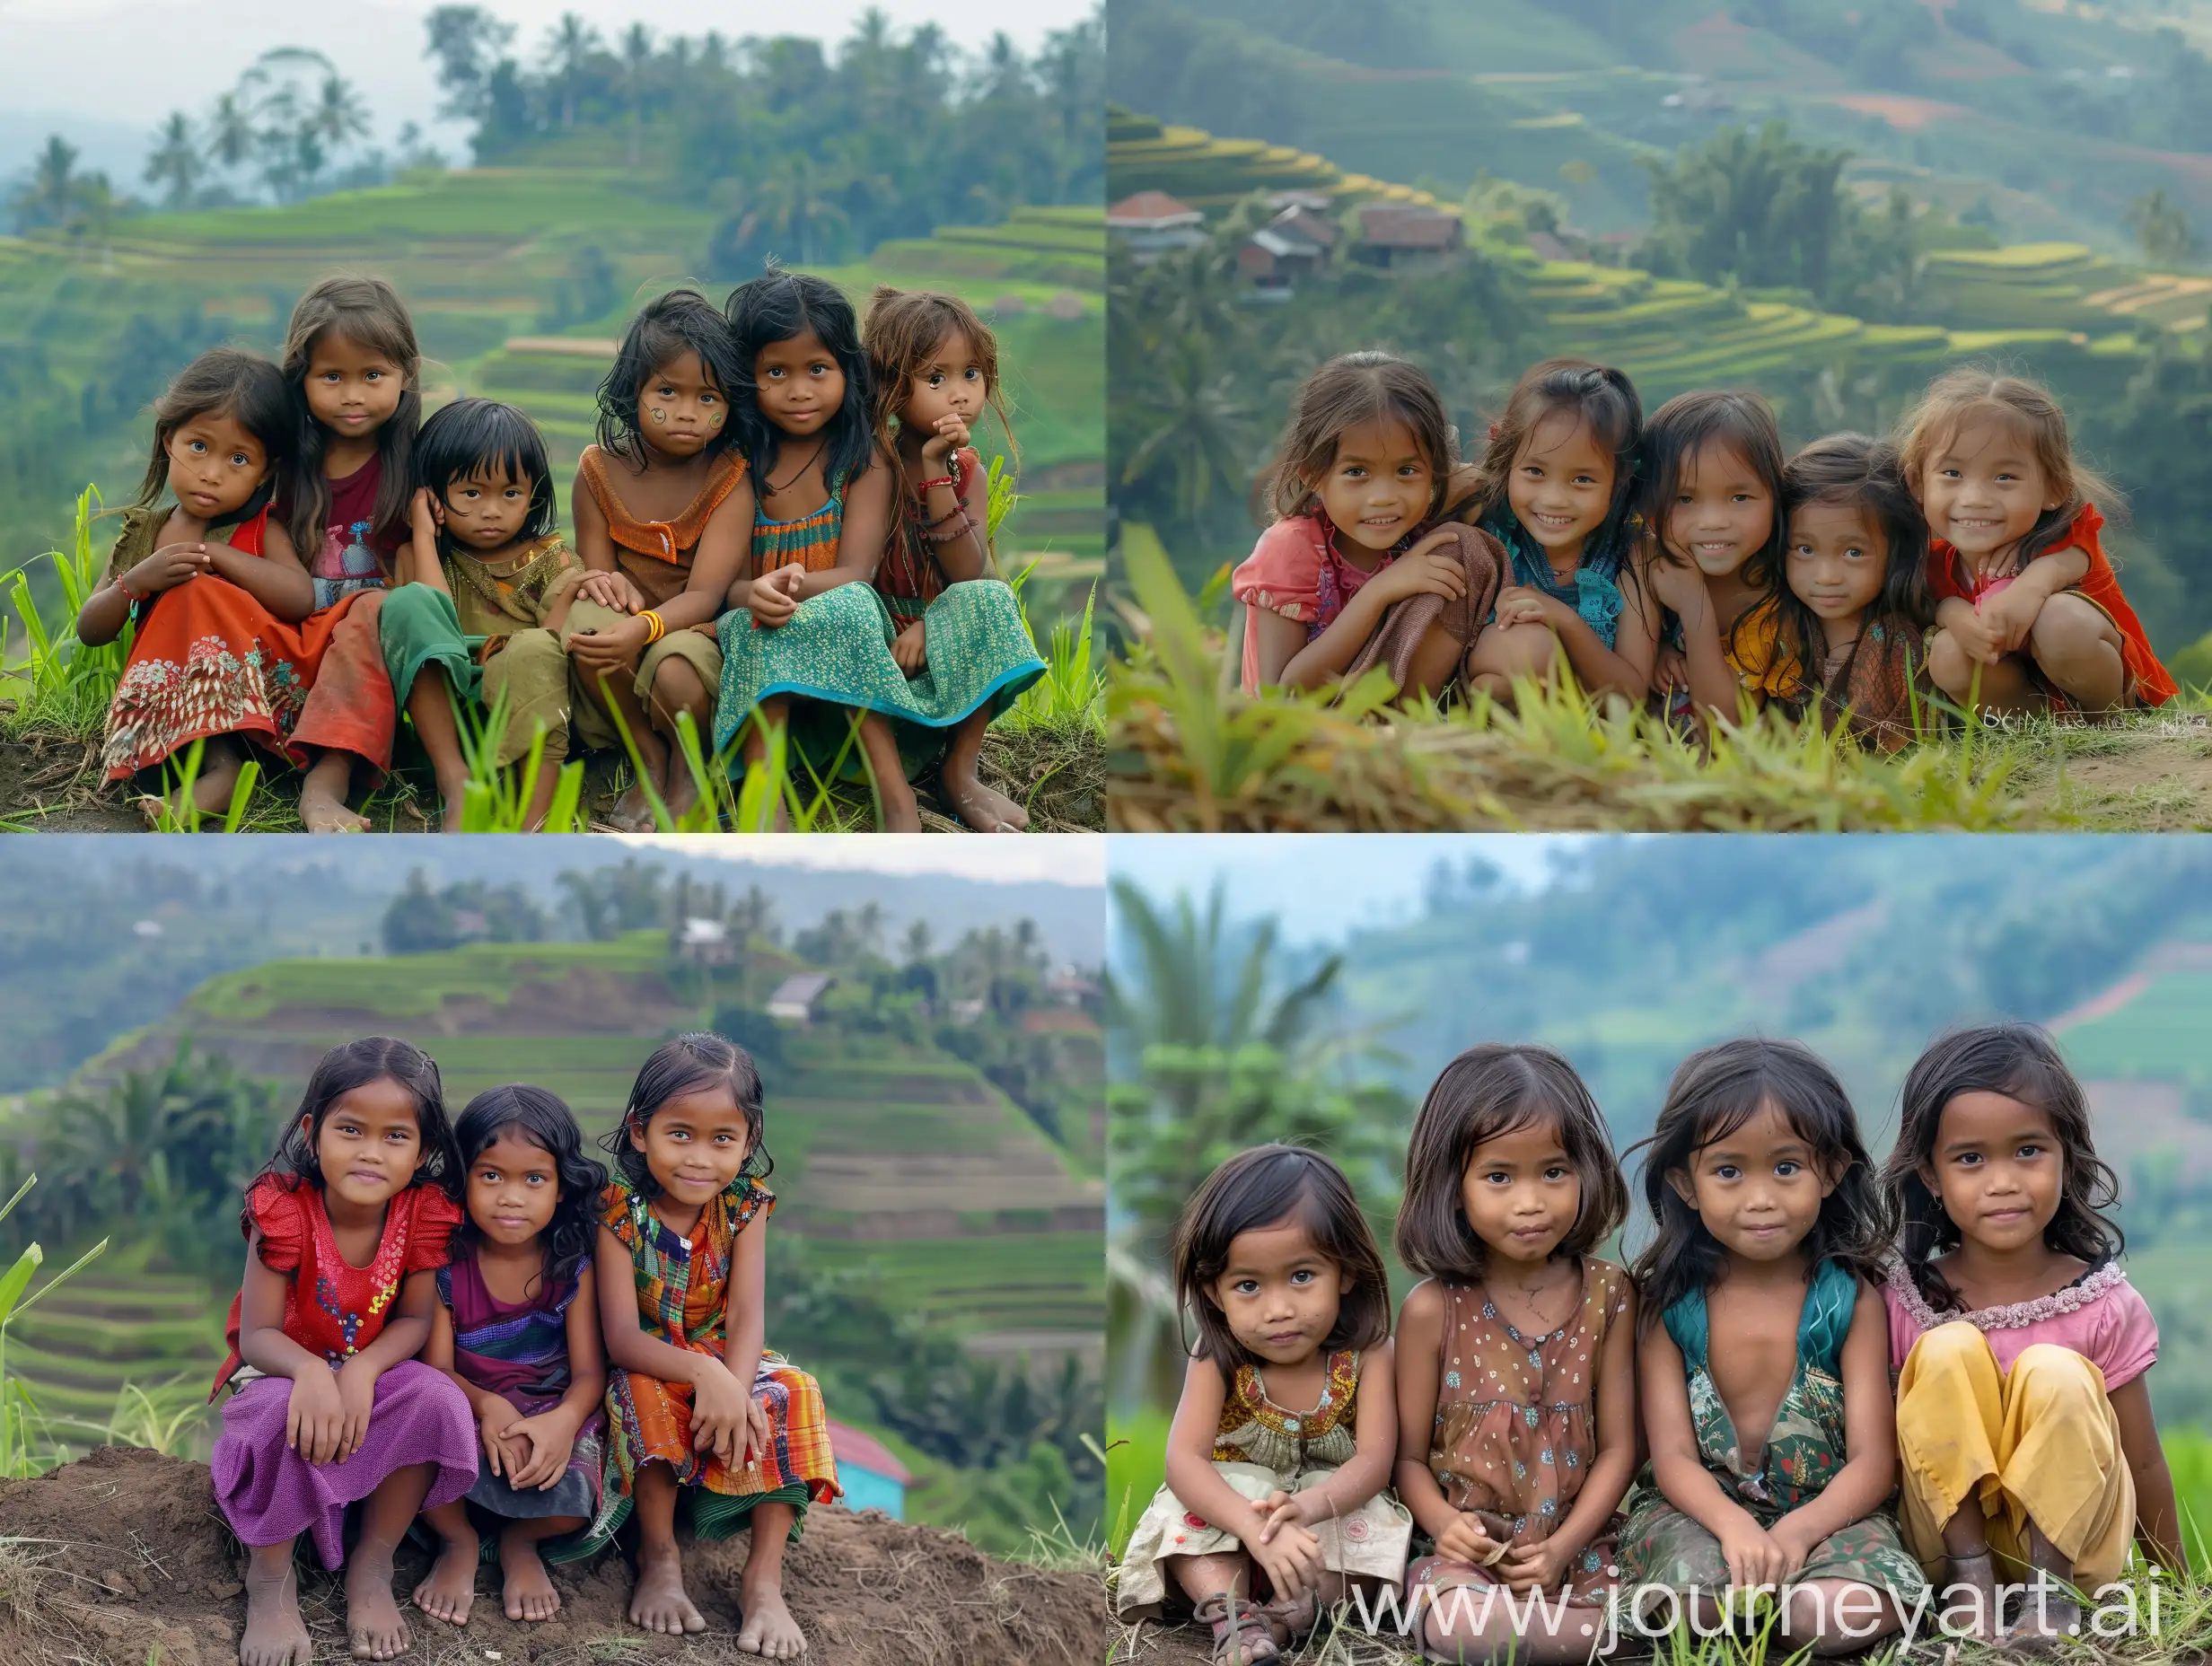 5 lima gadis desa cantik indonesia cilik berusia 7 tahun. Rambut panjang berantakan. Mereka berlima sedang duduk rapih diatas bukit. Dibelakangnya ada sawah dangl gunung bukit indah. Leica kamera. 8K HD. sangat detail.